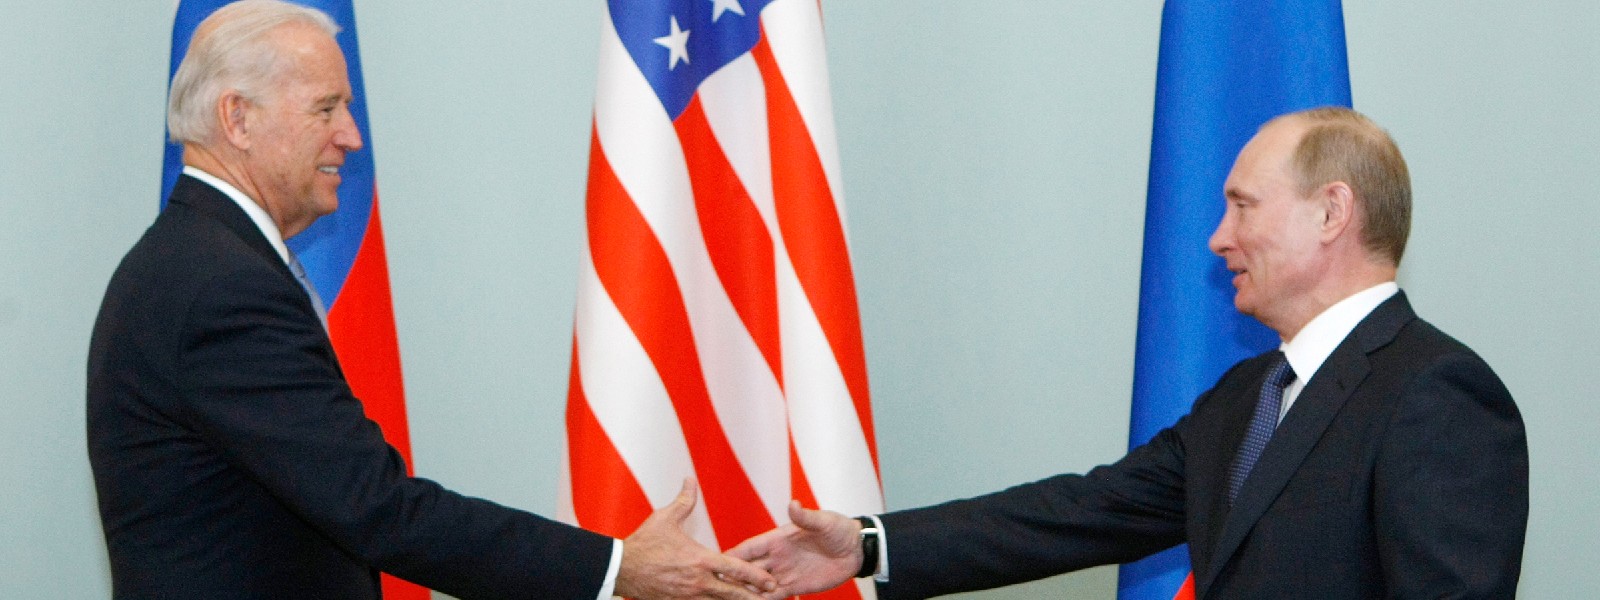 Biden agrees to meet with Putin ‘in principle’